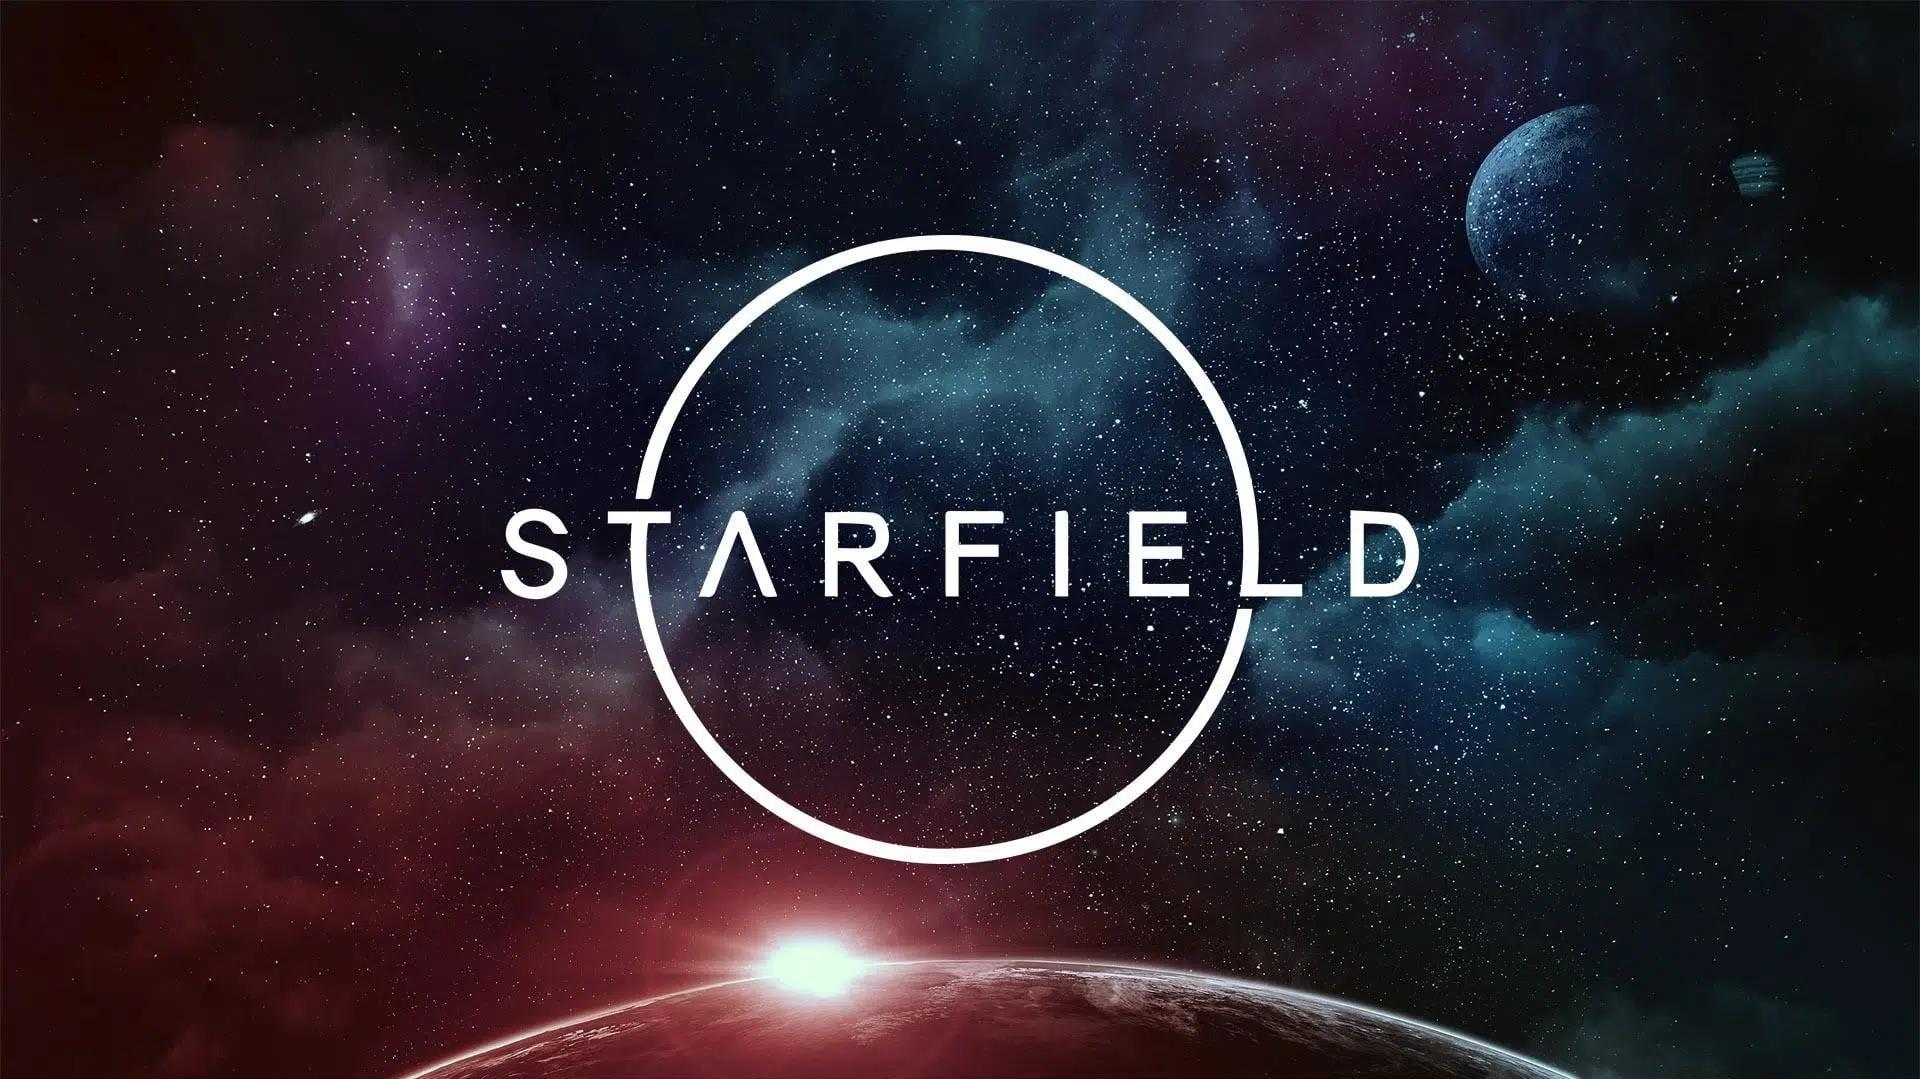 Starfield Release Date Announced For September Insider Gaming